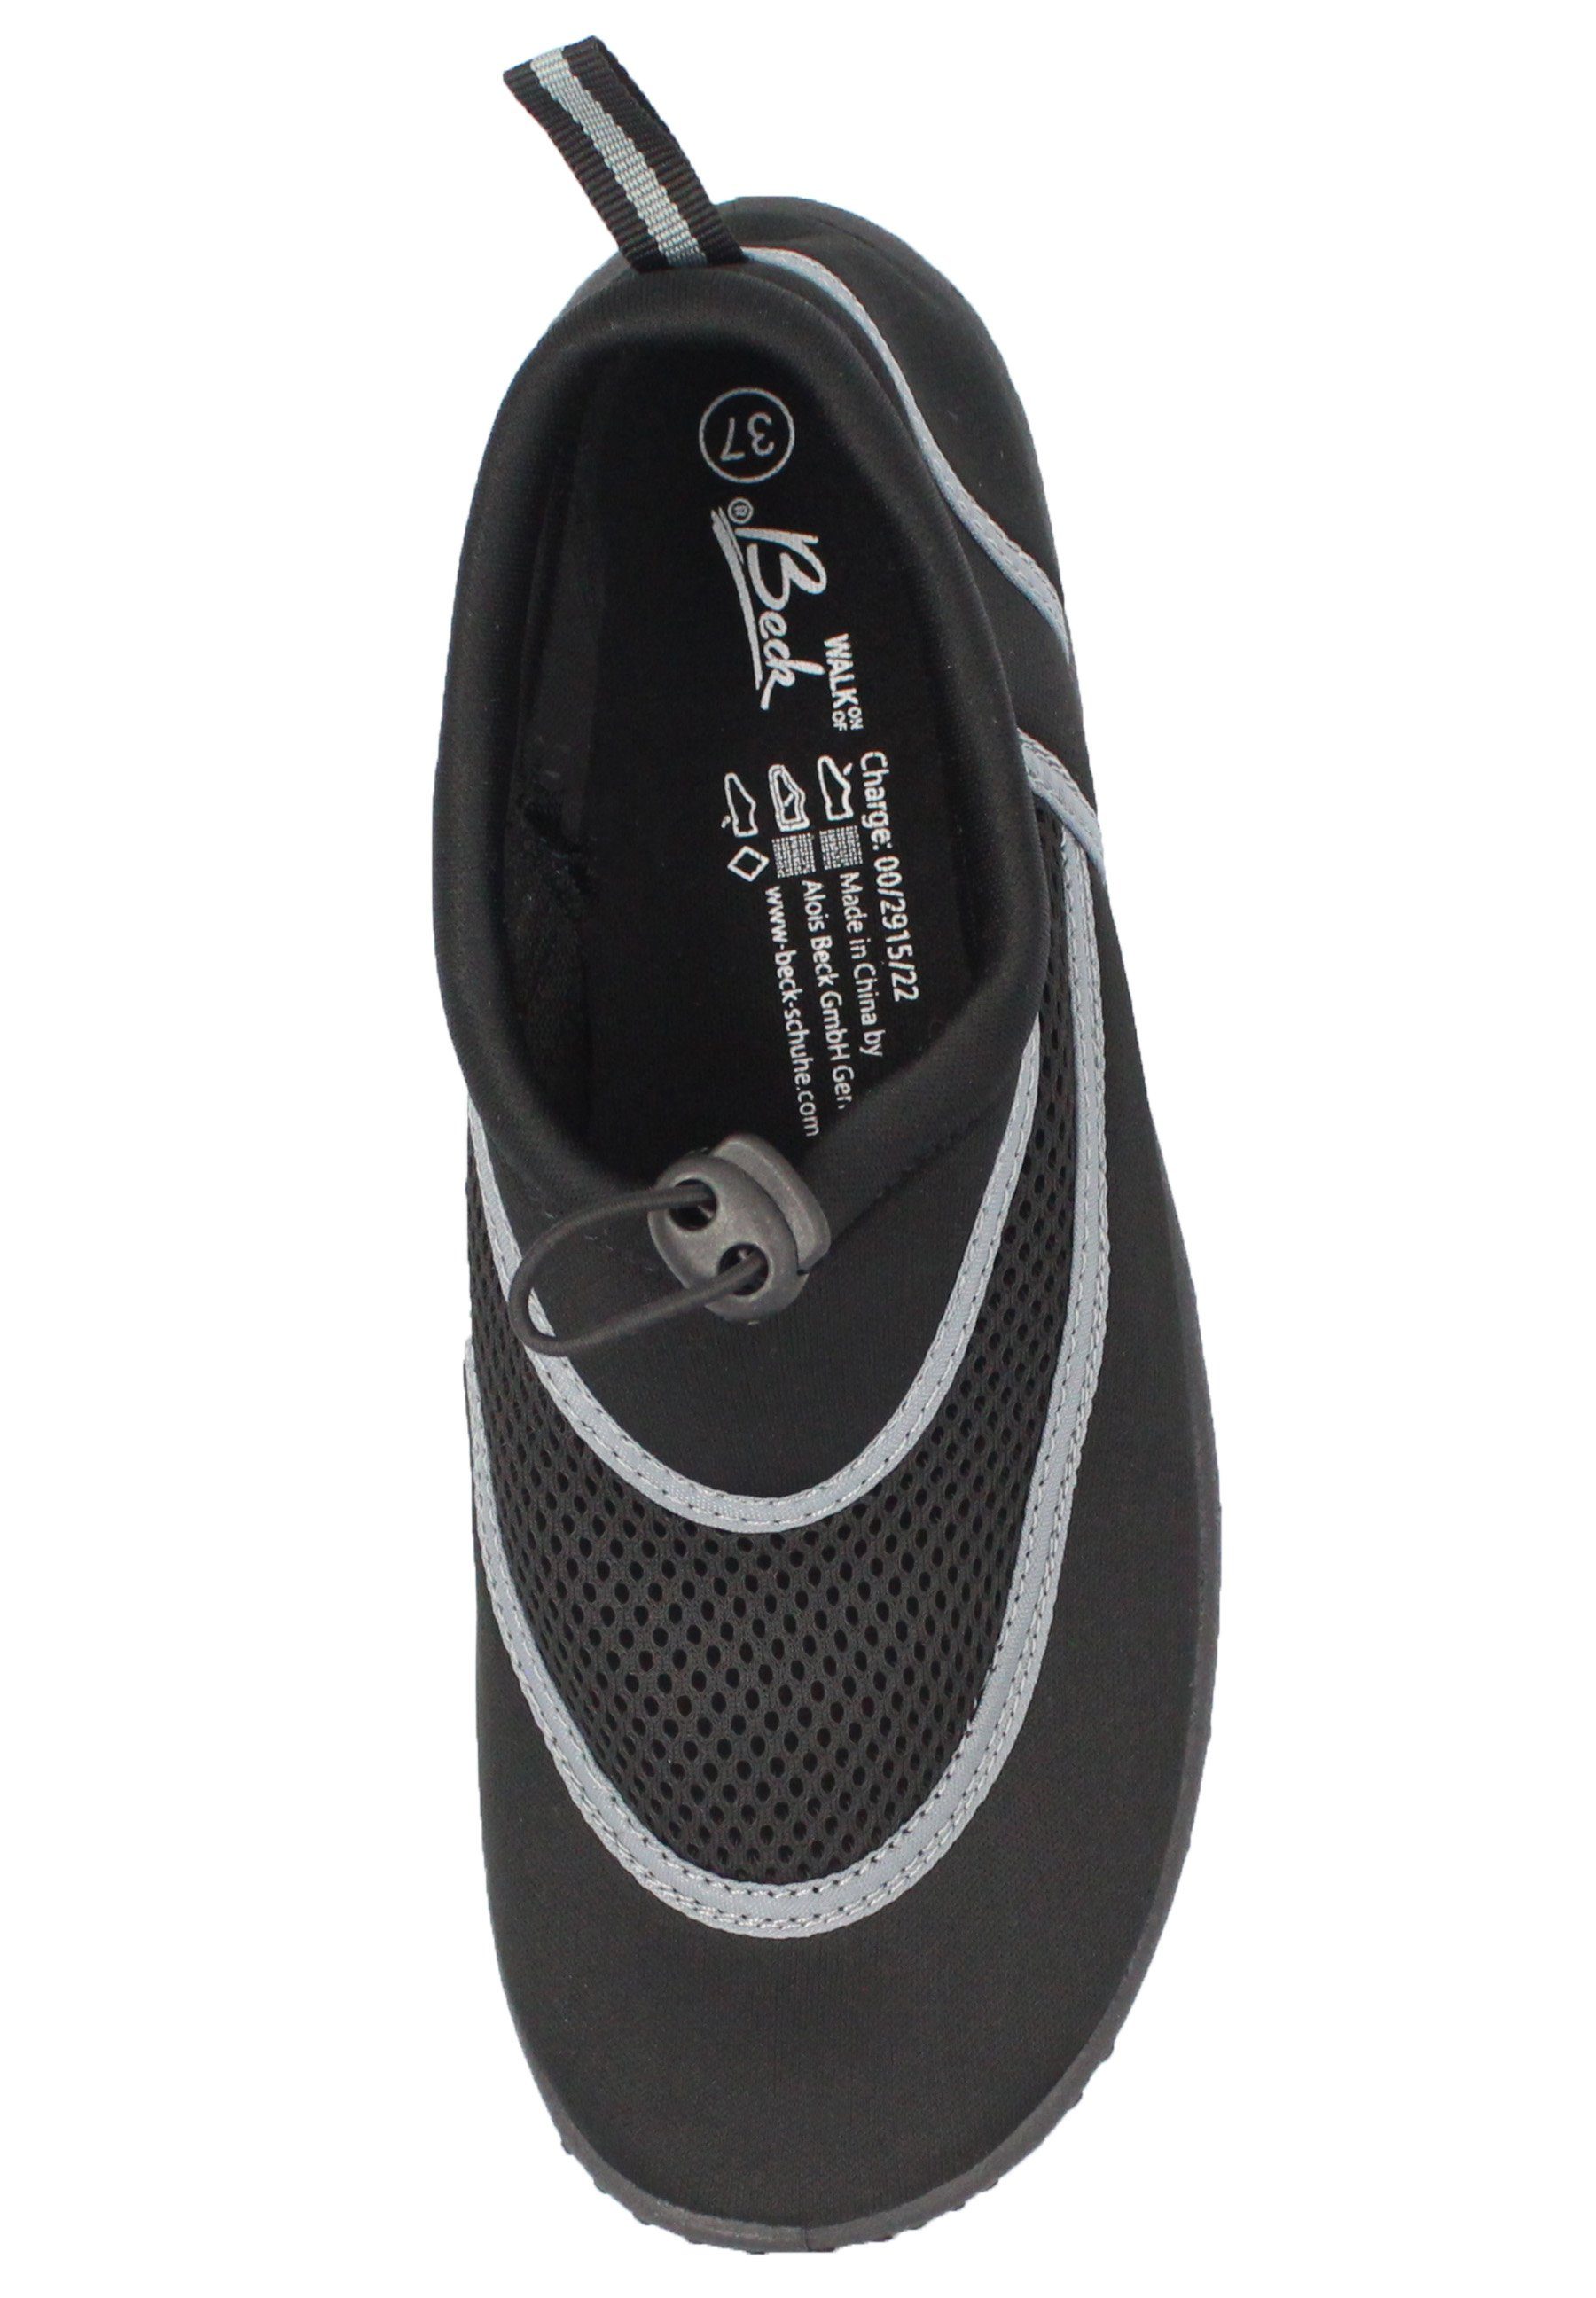 für Badeschuh Laufsohle, Badeschuh flexible, Pool stabile Schuhe, und rutschfeste geschützte (leichte, Füße schwarz Strand) an Aqua schnelltrocknend Beck flexible